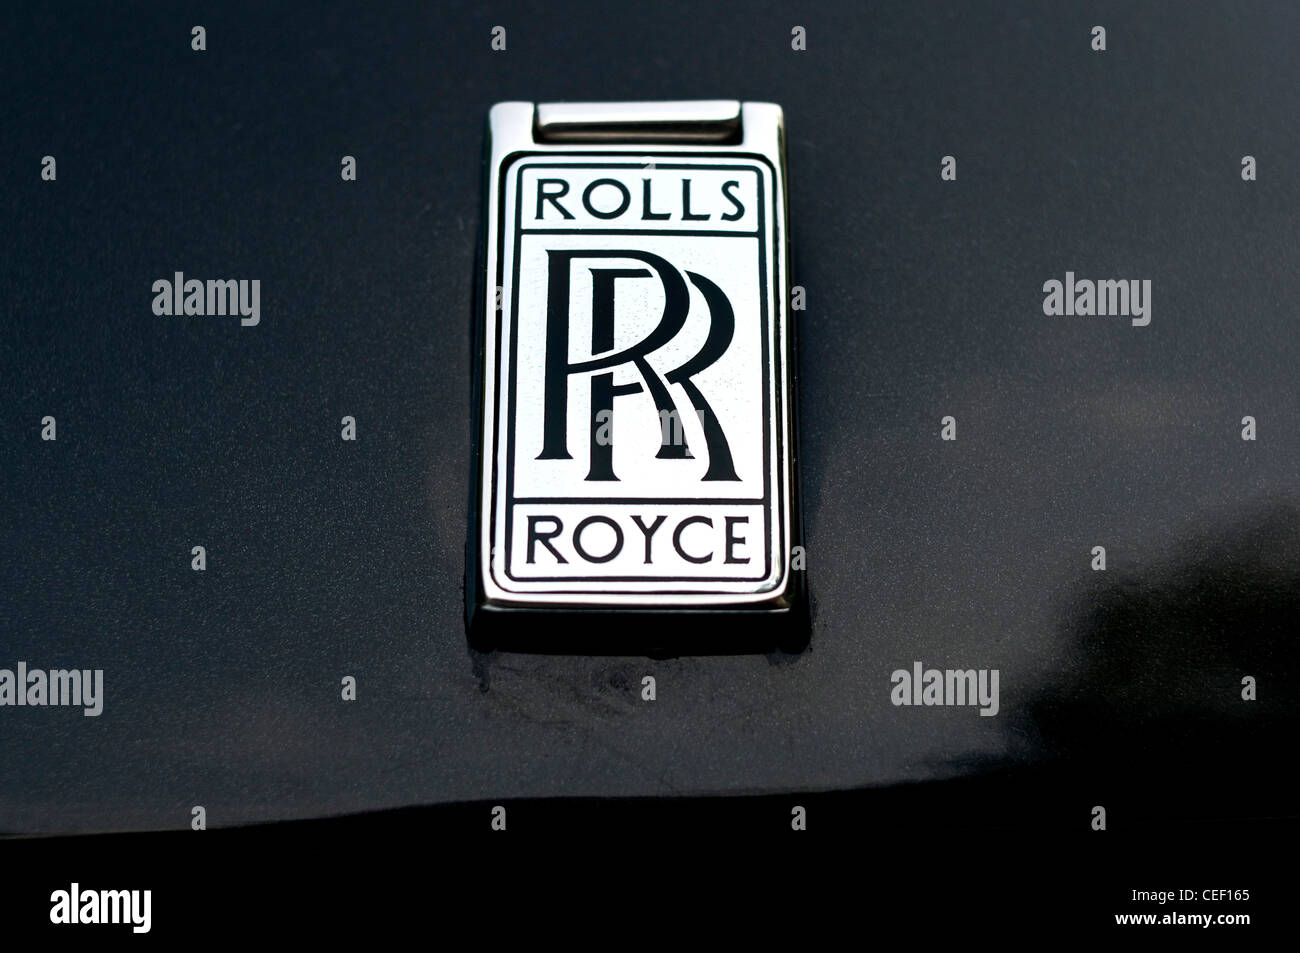 rolls royce logo on the bonnet Stock Photo